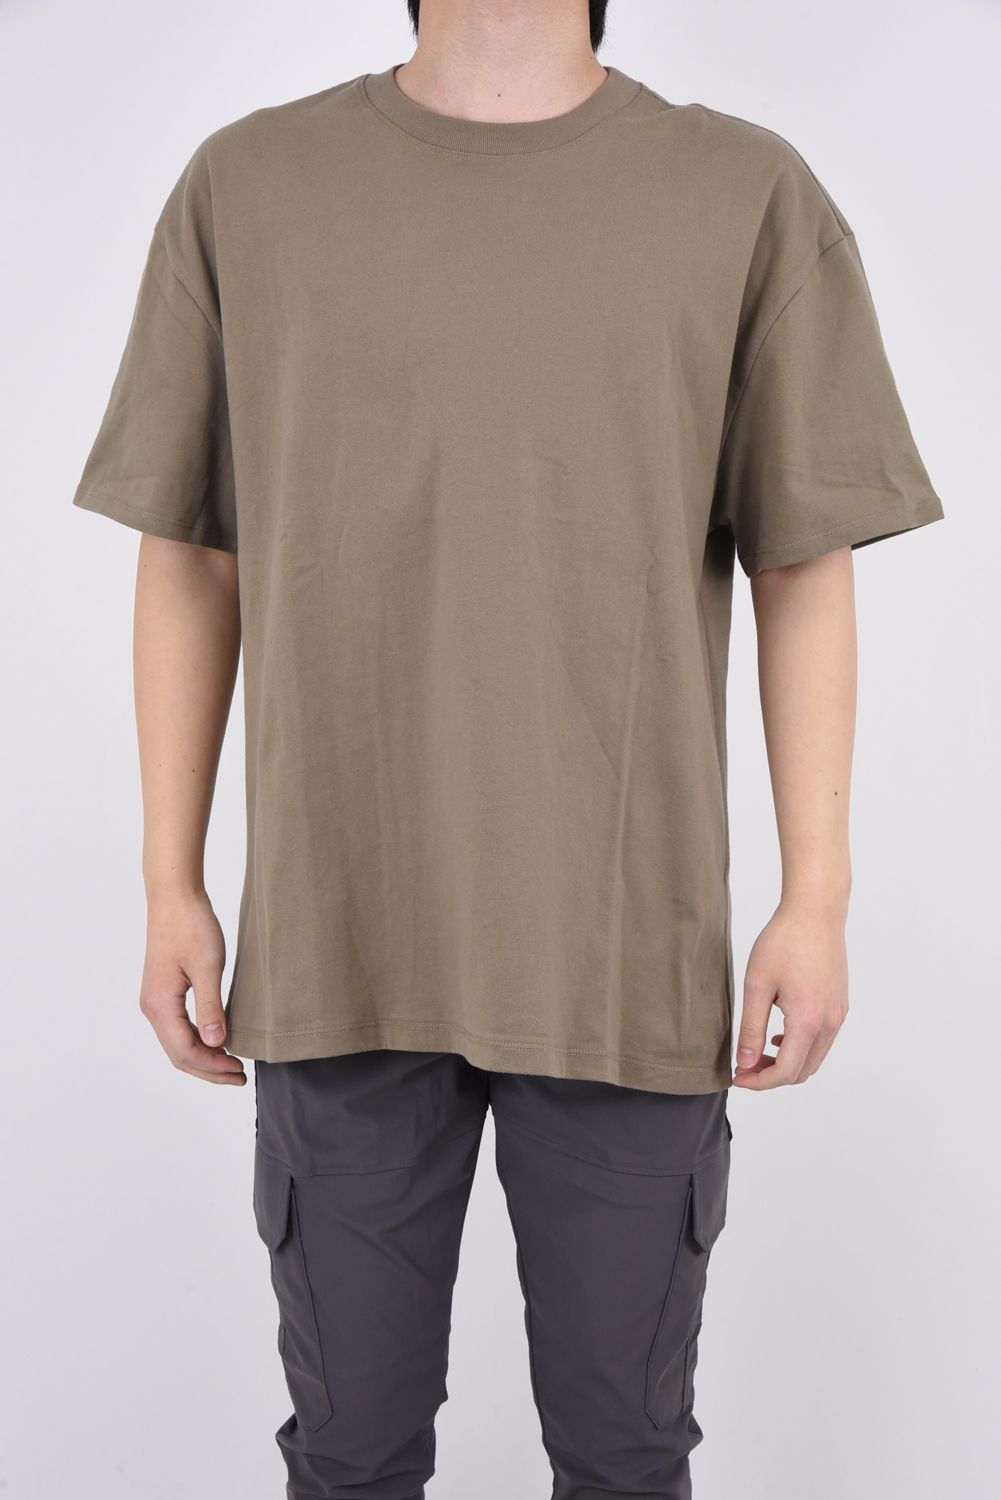 FOG ESSENTIALS - ESSENTIALS BACK LOGO T-Shirt / バックロゴ 半袖 Tシャツ トープ | gossip